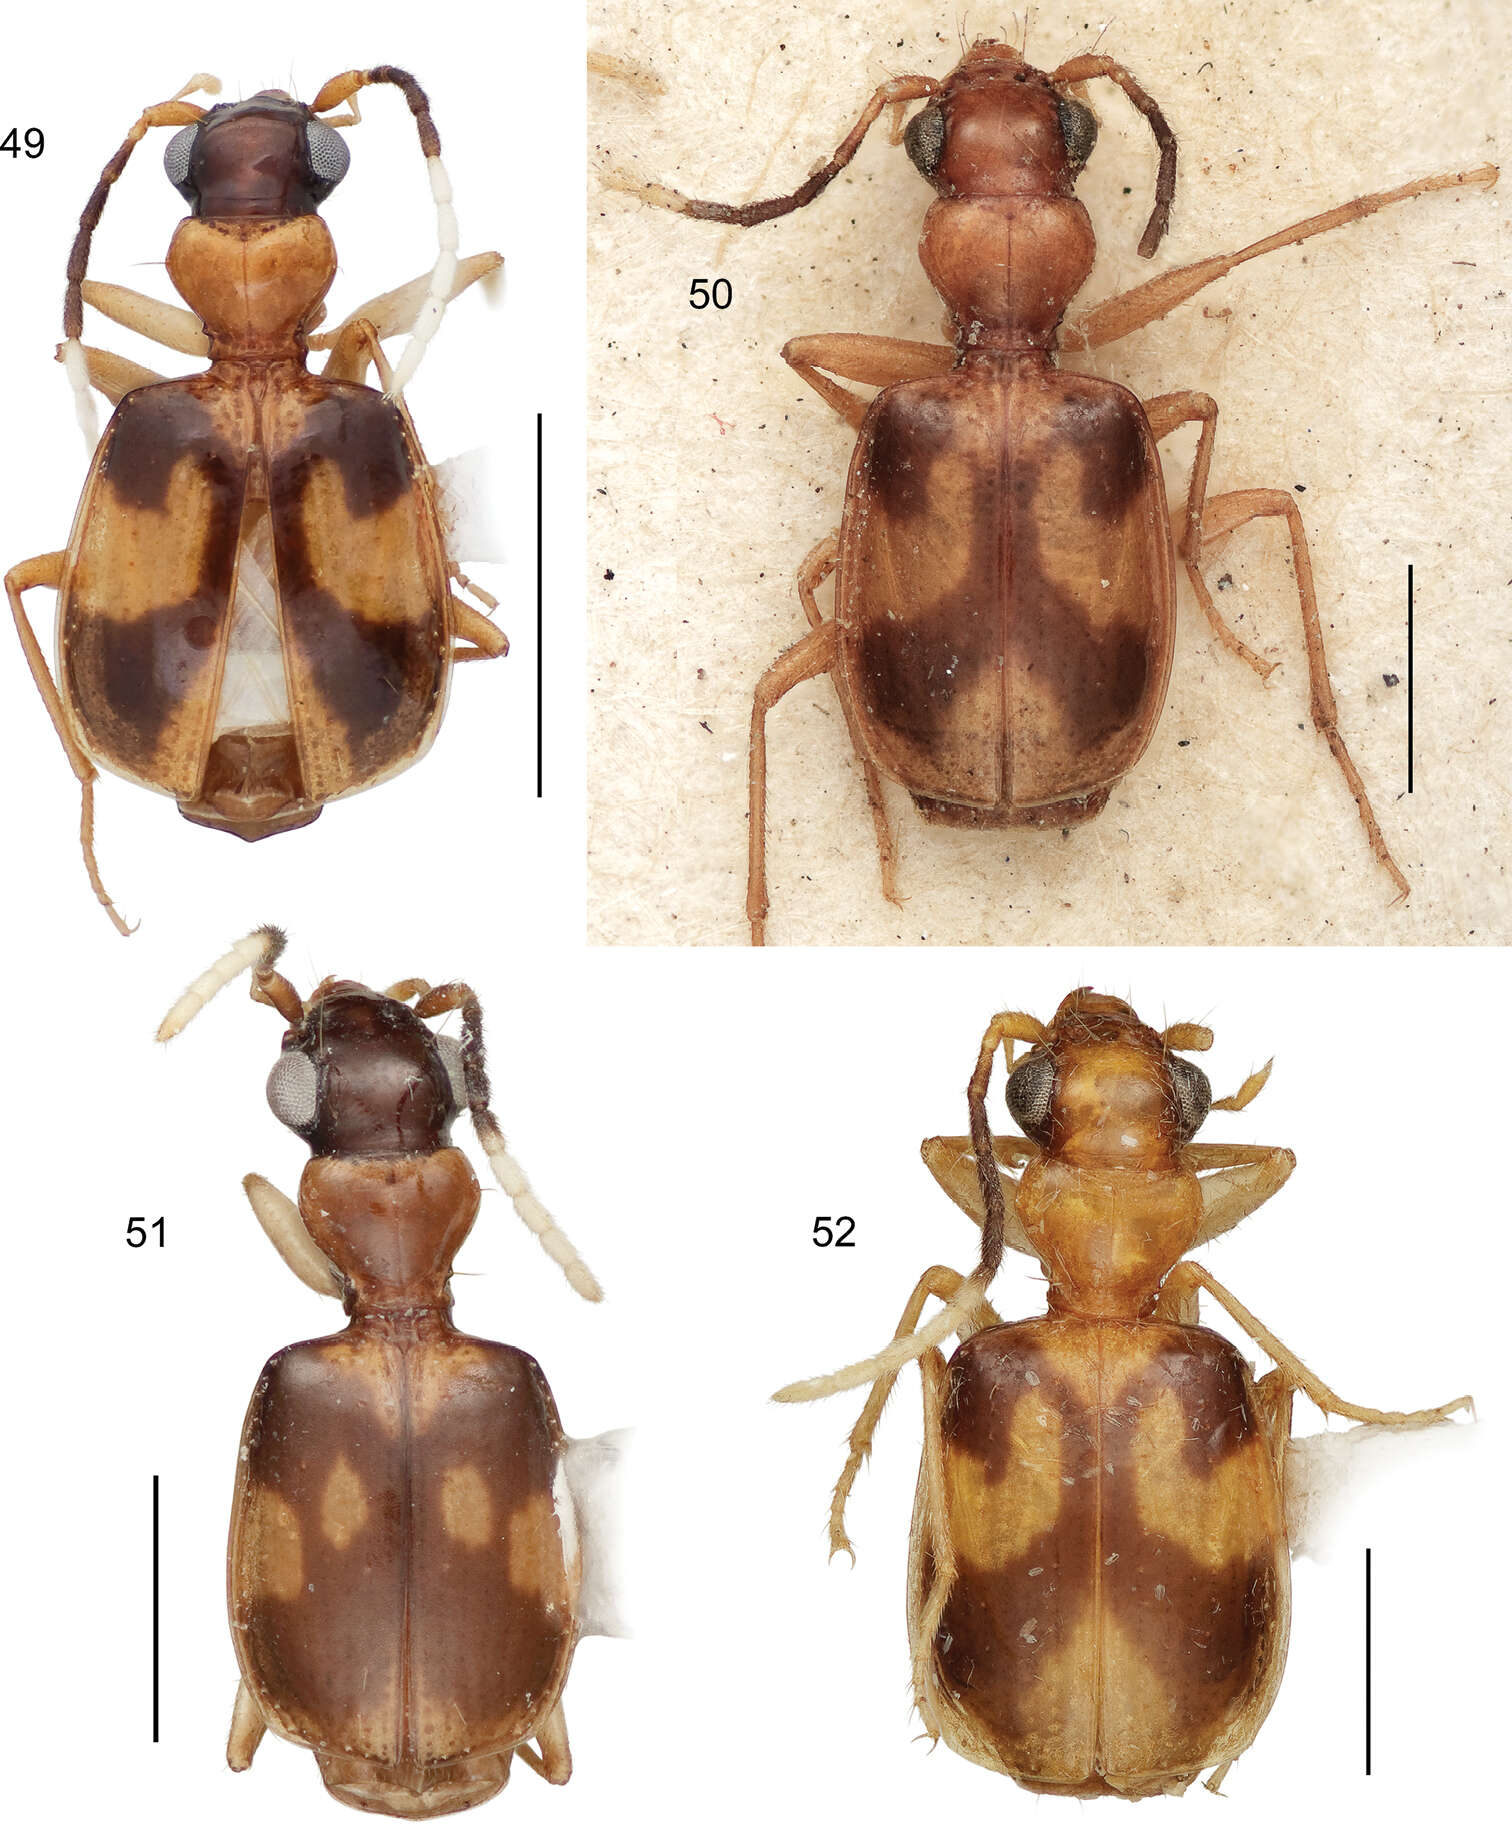 Image of Asklepia samiriaensis Zamorano & Erwin 2014